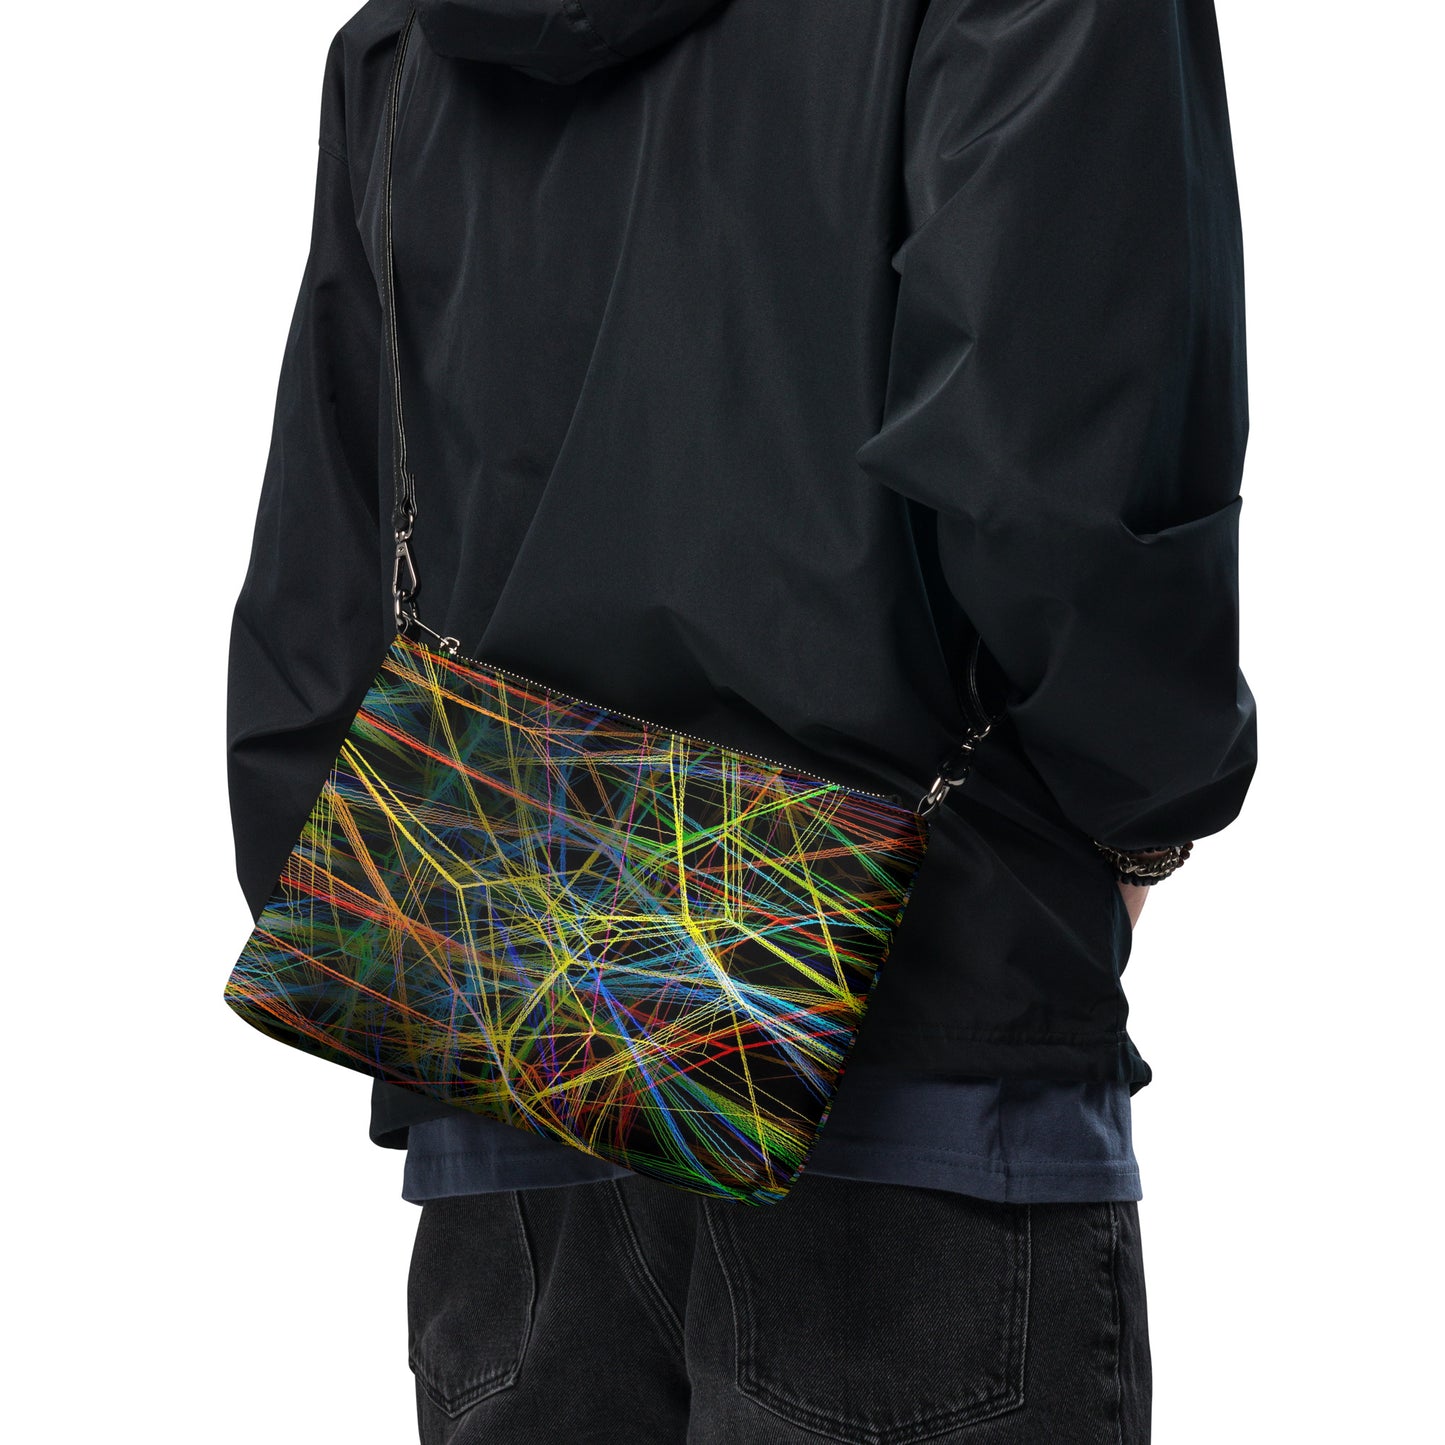 Crossbody bag - The Deep - Zeeks - Art for Geeks